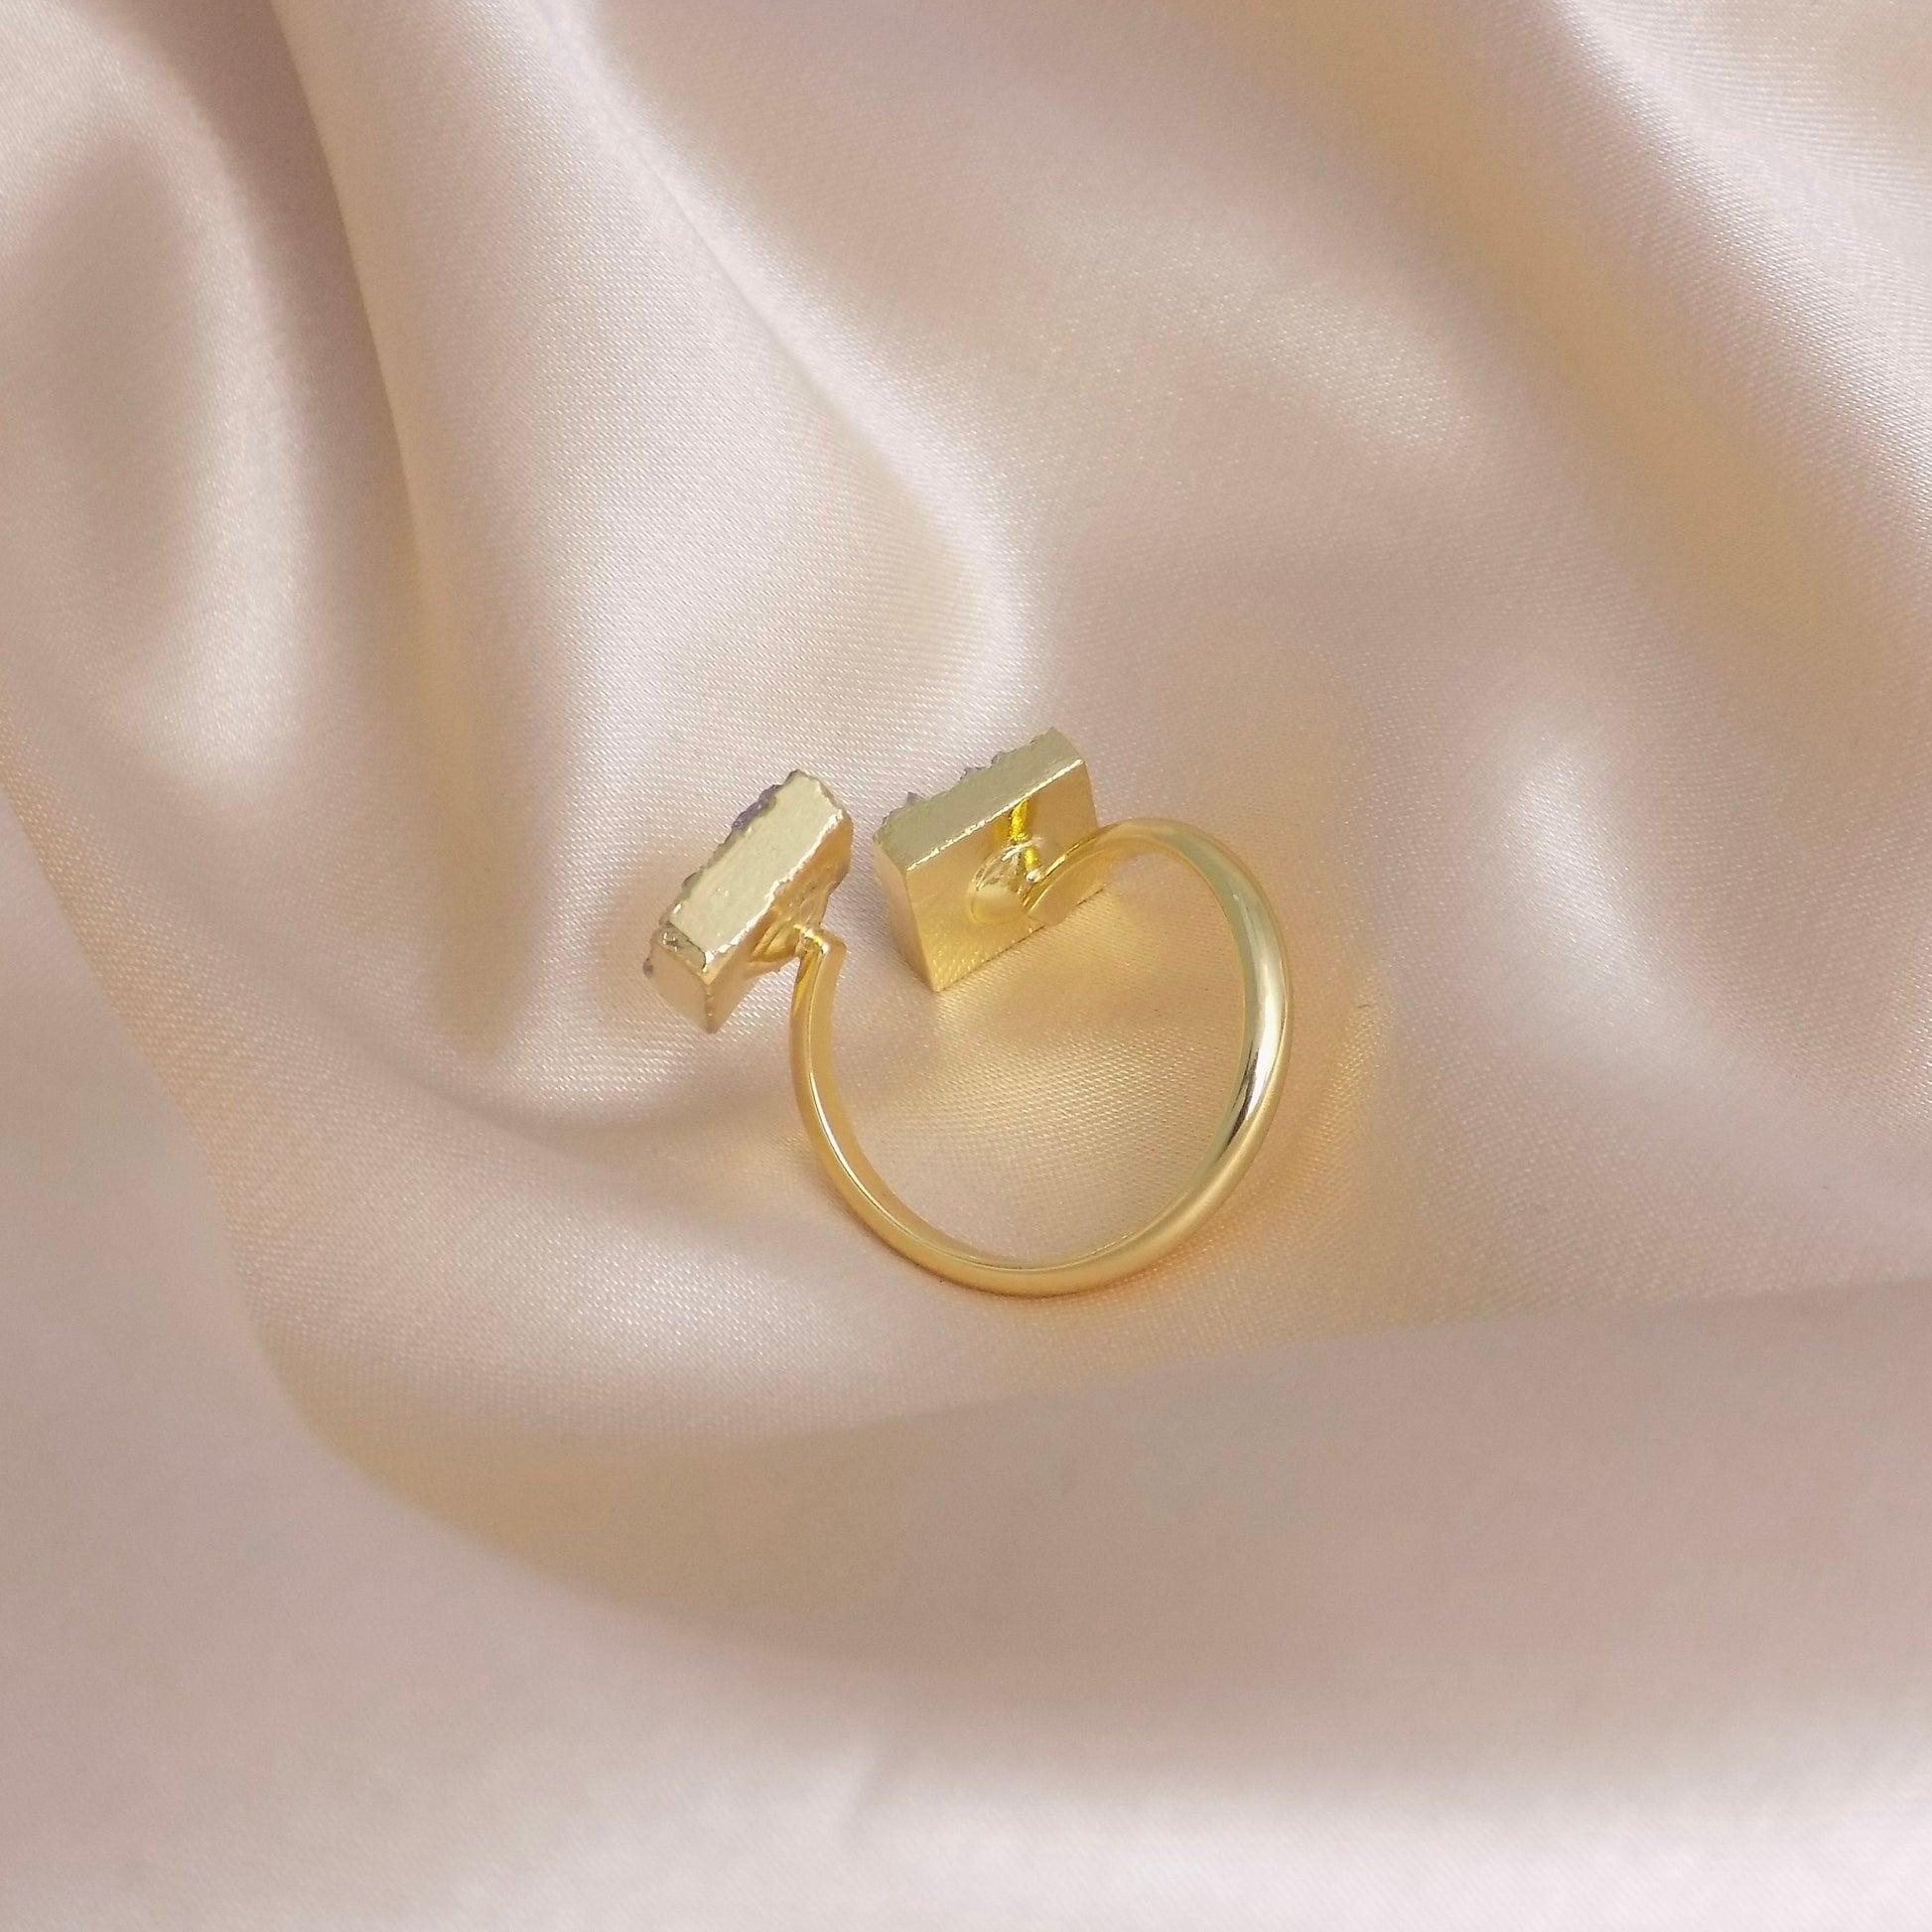 Natural Druzy Ring, Minimalist Gemstone Ring Adjustable Band Gold Plated, M6-737